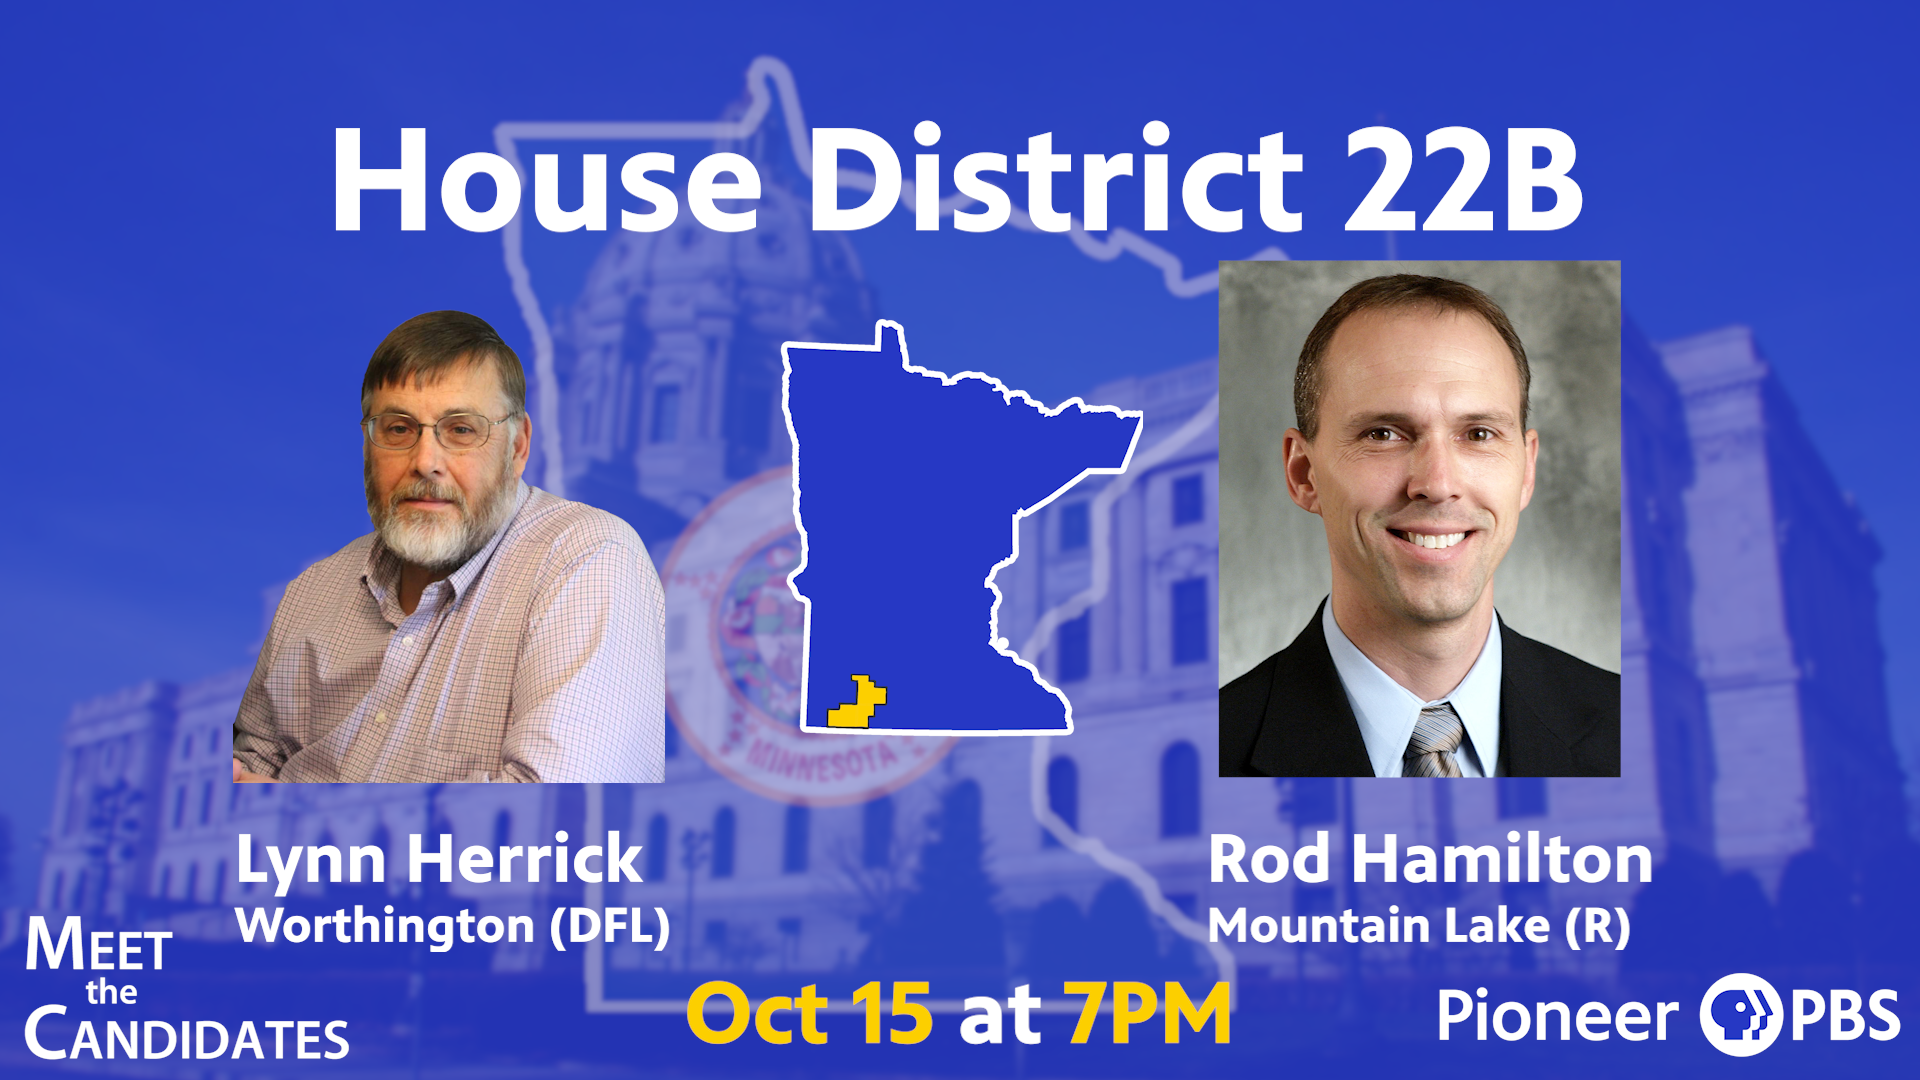 House District 22B incumbent Rod Hamilton (R) of Mountain Lake and challenger Lynn Herrick (DFL) of Worthington.